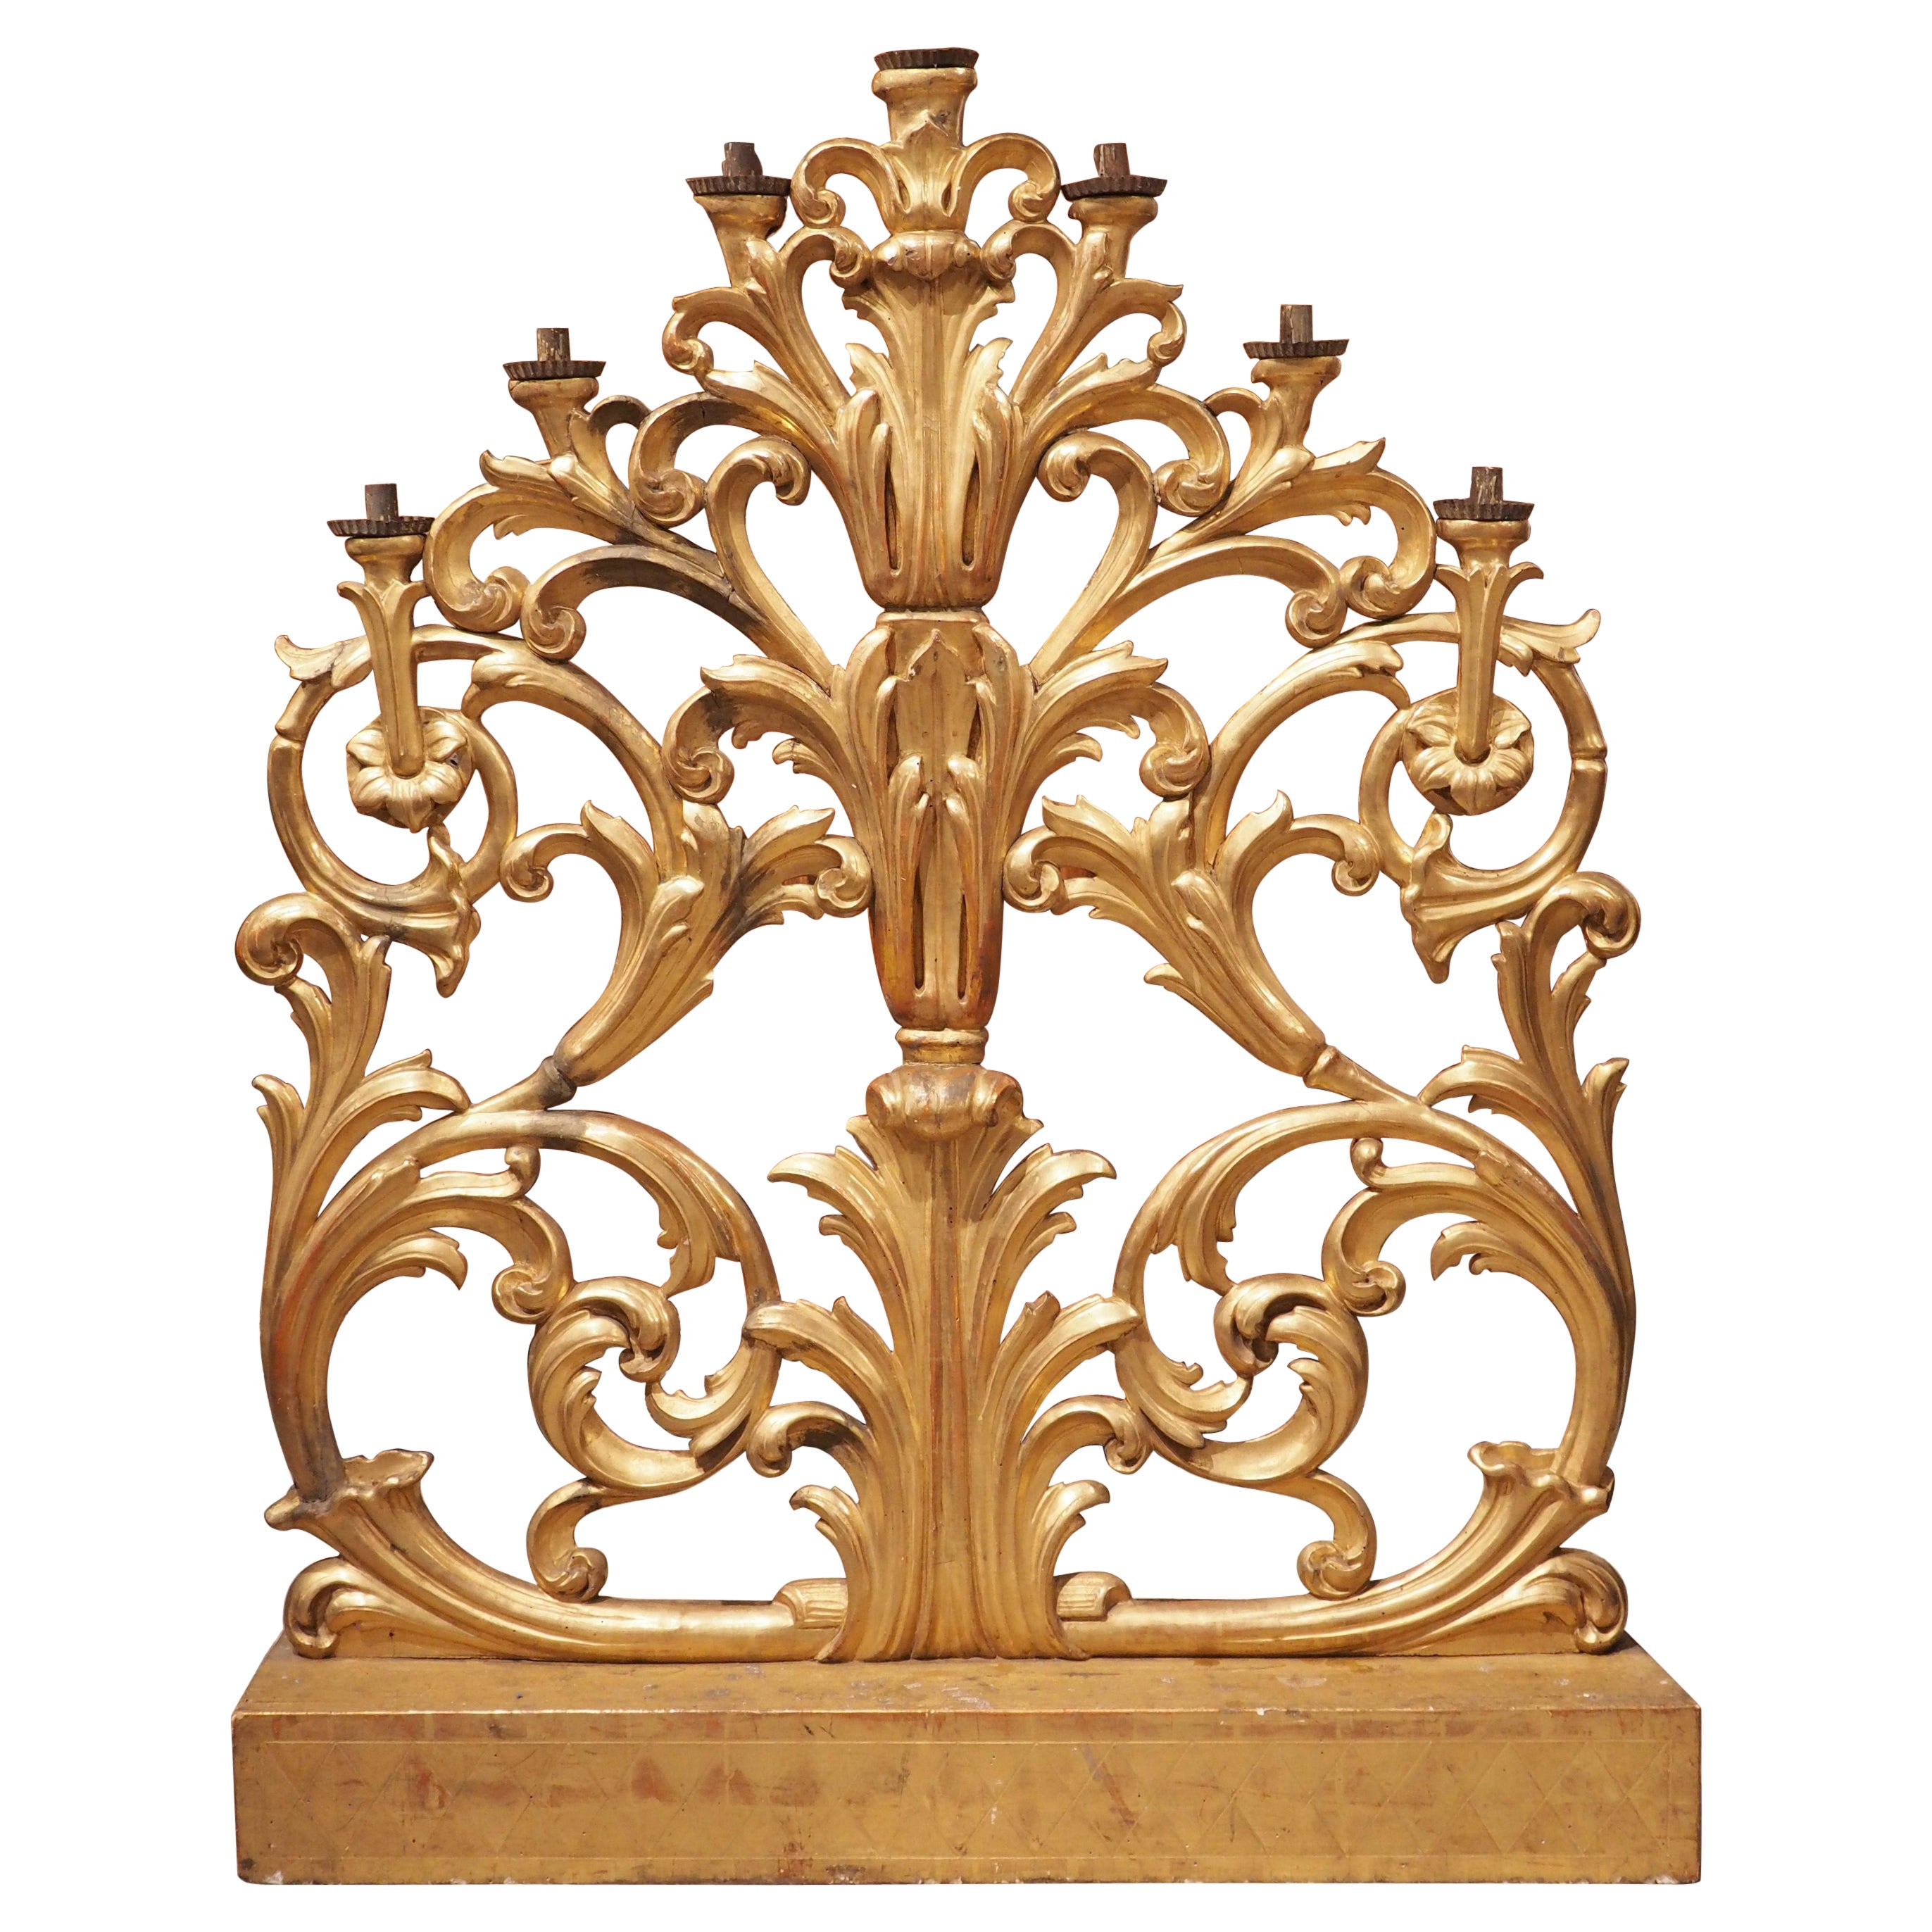 Antiker Altarkandelaber aus vergoldetem Holz aus der Toskana, um 1800